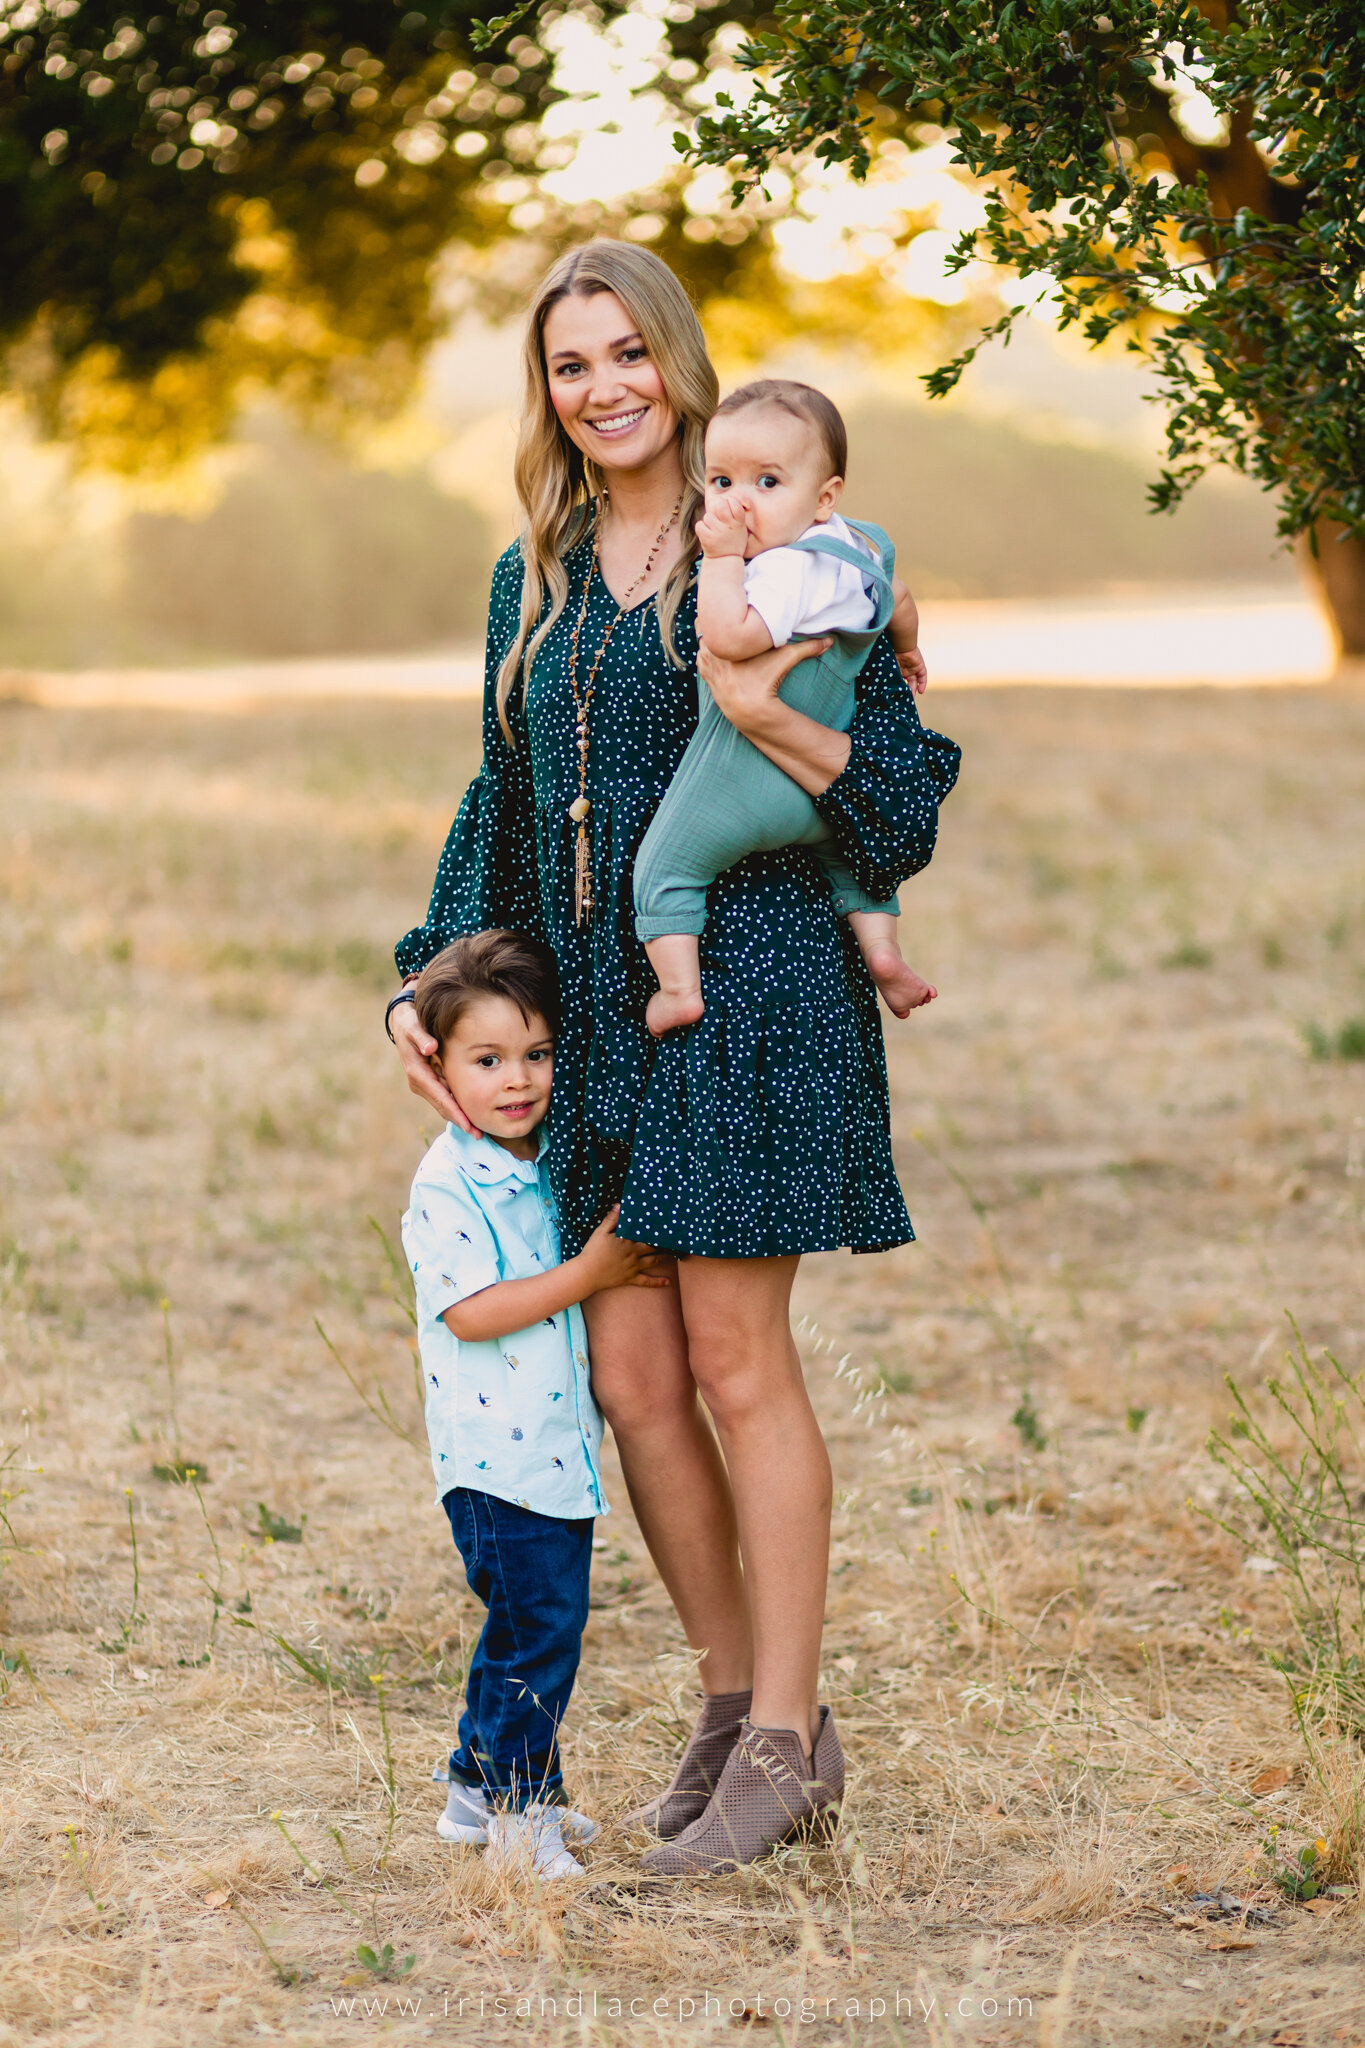 Mountain View, California Family Photos  |   Iris and Lace Photography